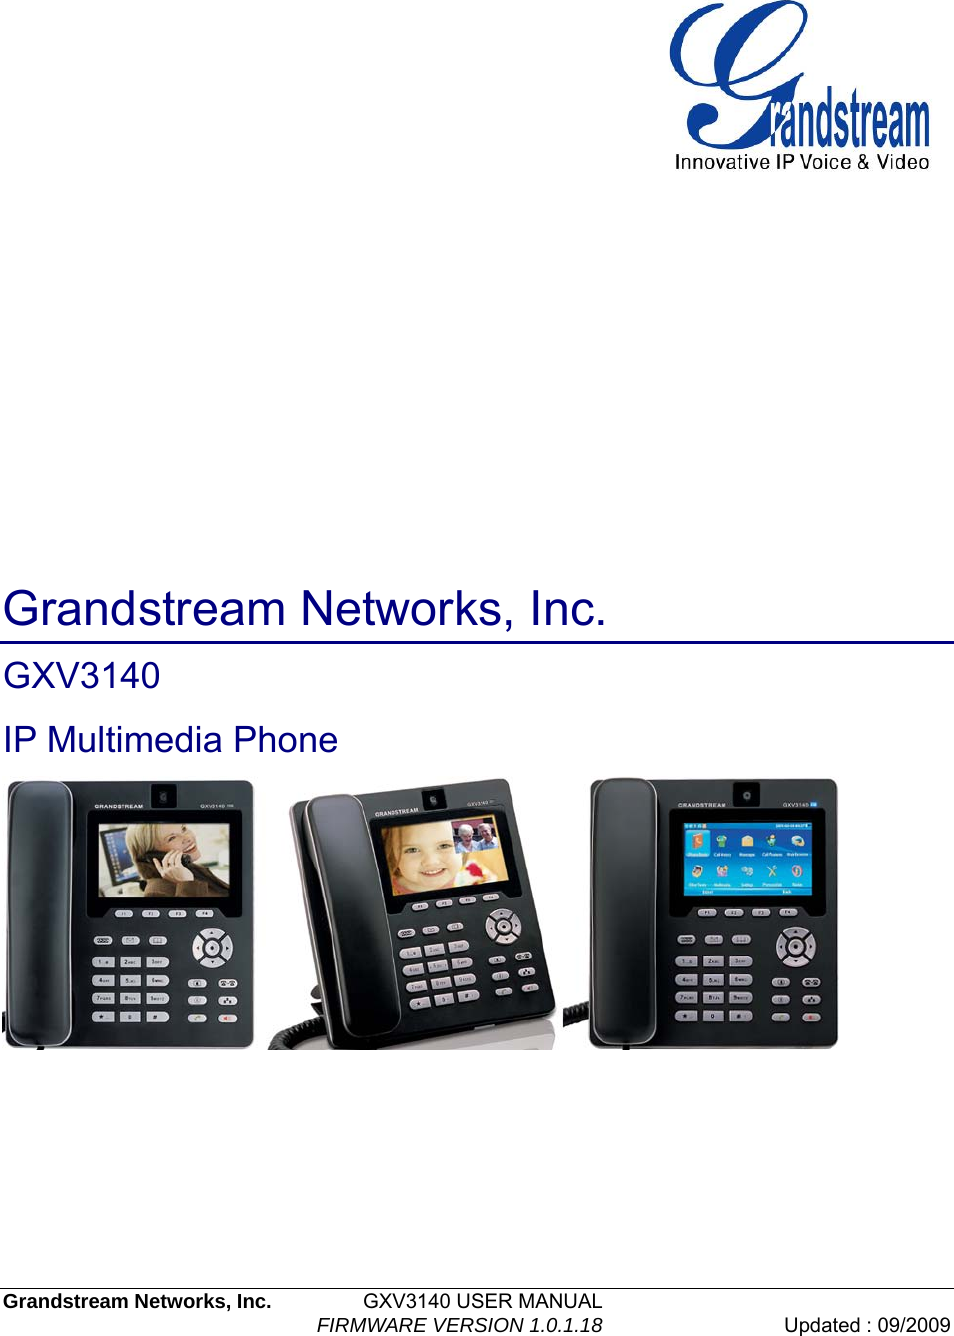  Grandstream Networks, Inc.         GXV3140 USER MANUAL                                  FIRMWARE VERSION 1.0.1.18 Updated : 09/2009                Grandstream Networks, Inc. GXV3140  IP Multimedia Phone 